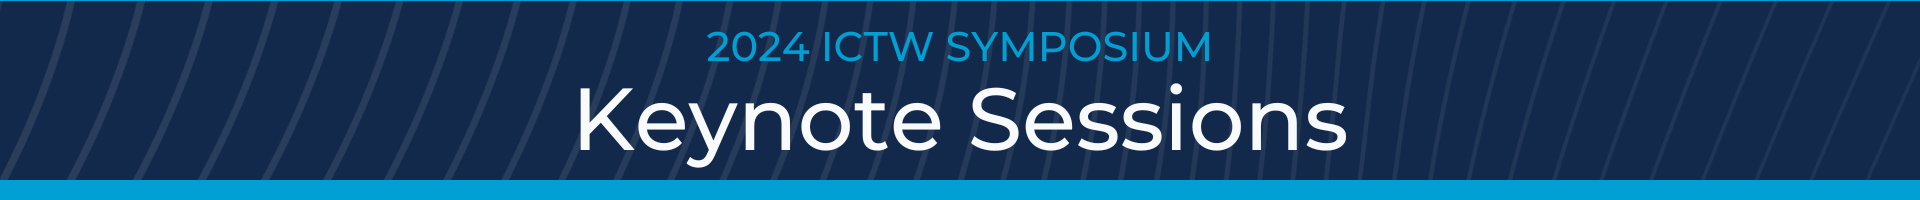 2024 ICTW Symposium: Keynote Sessions